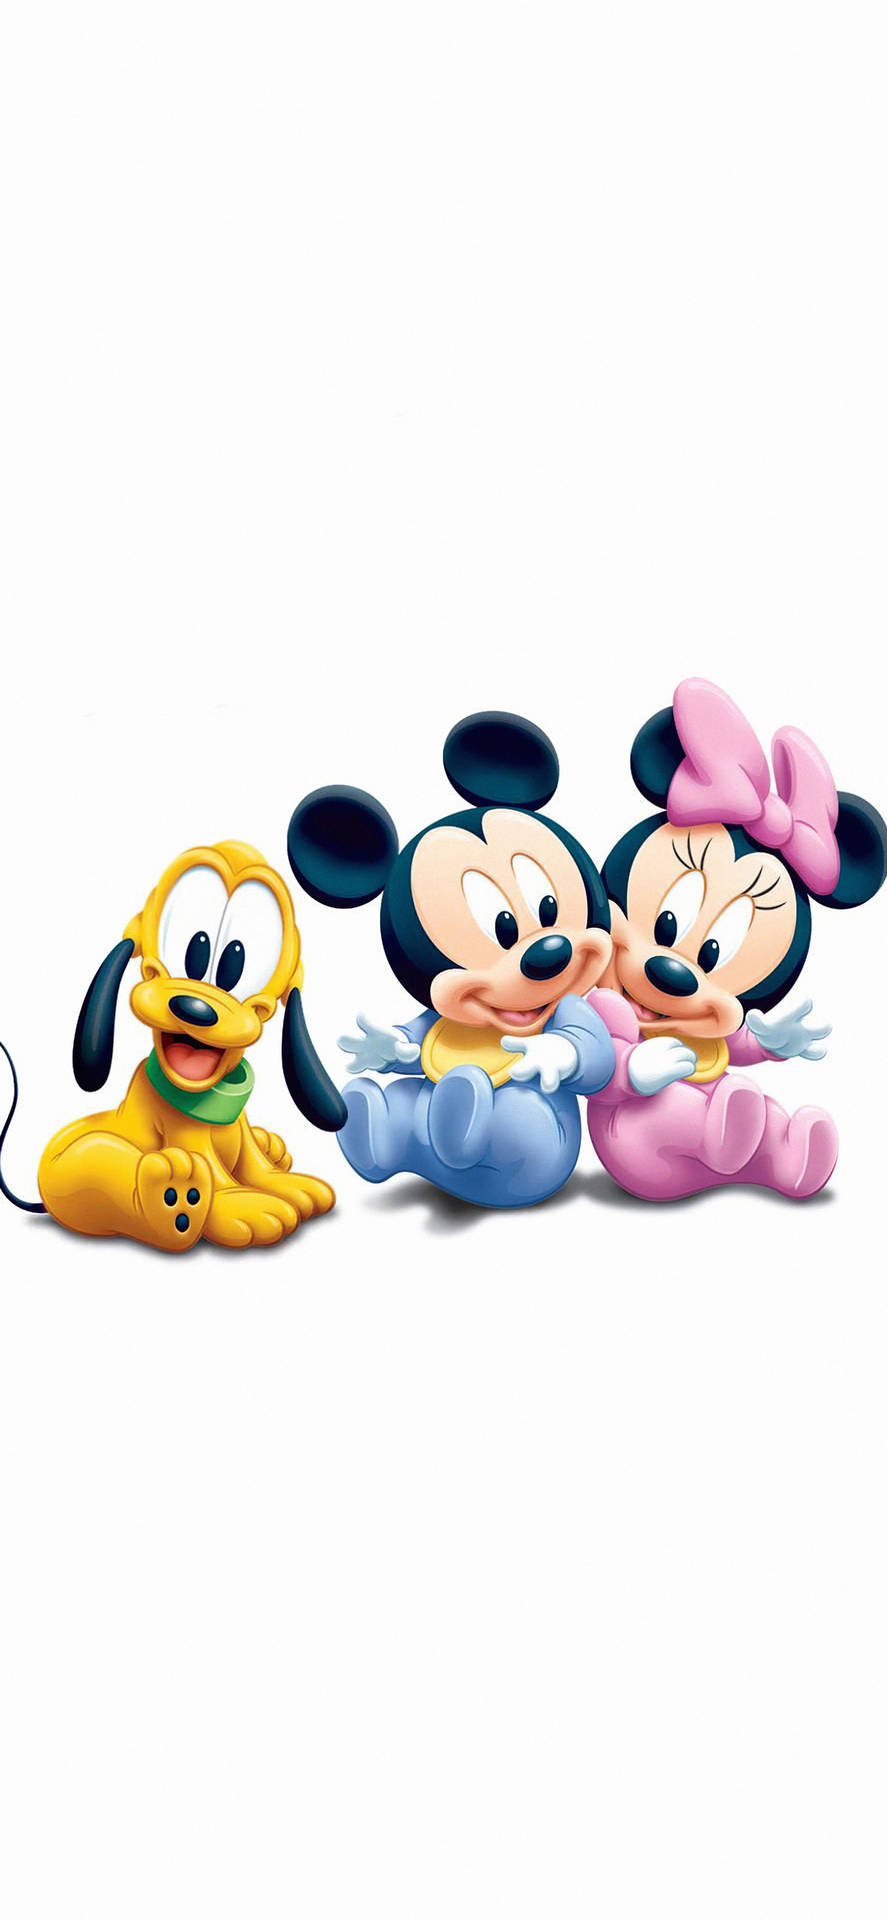 Top 999+ Cute Disney Wallpaper Full HD, 4K✅Free to Use